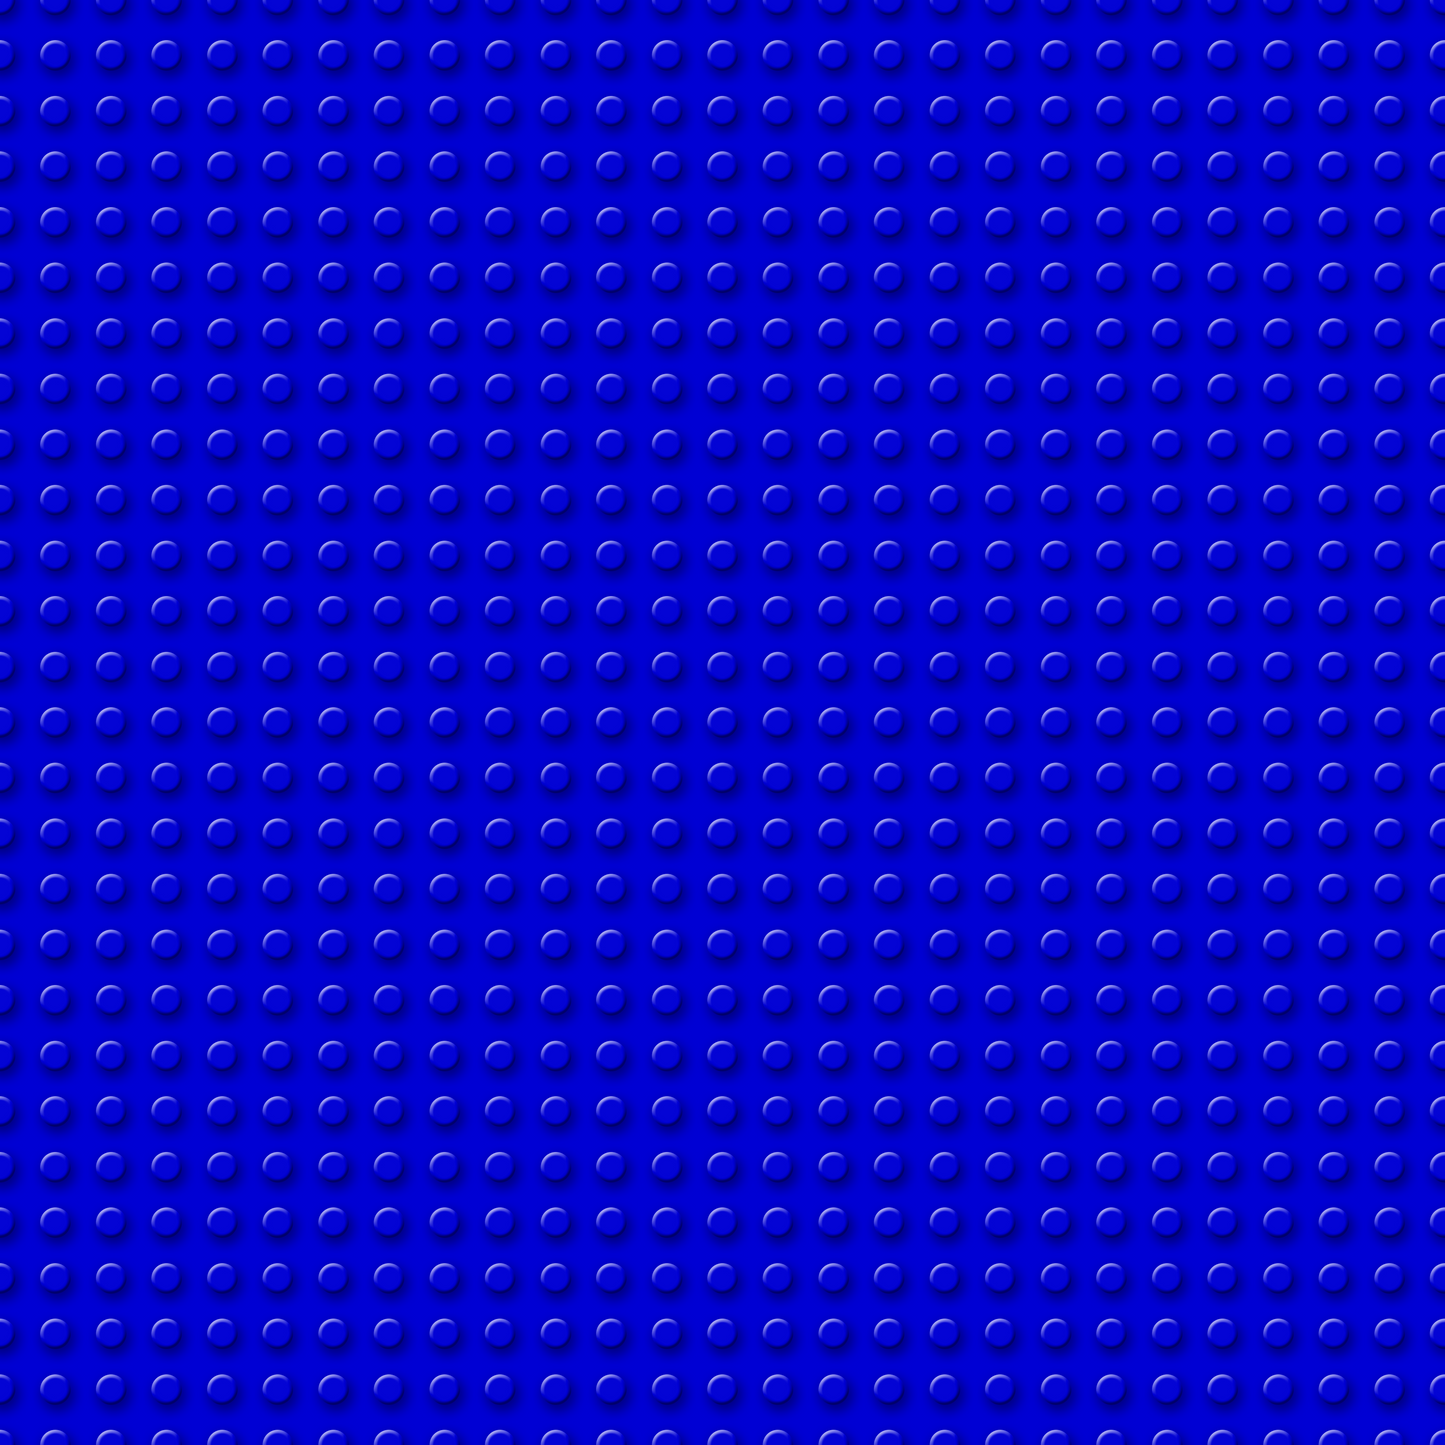 Building Blocks - Blue - 031